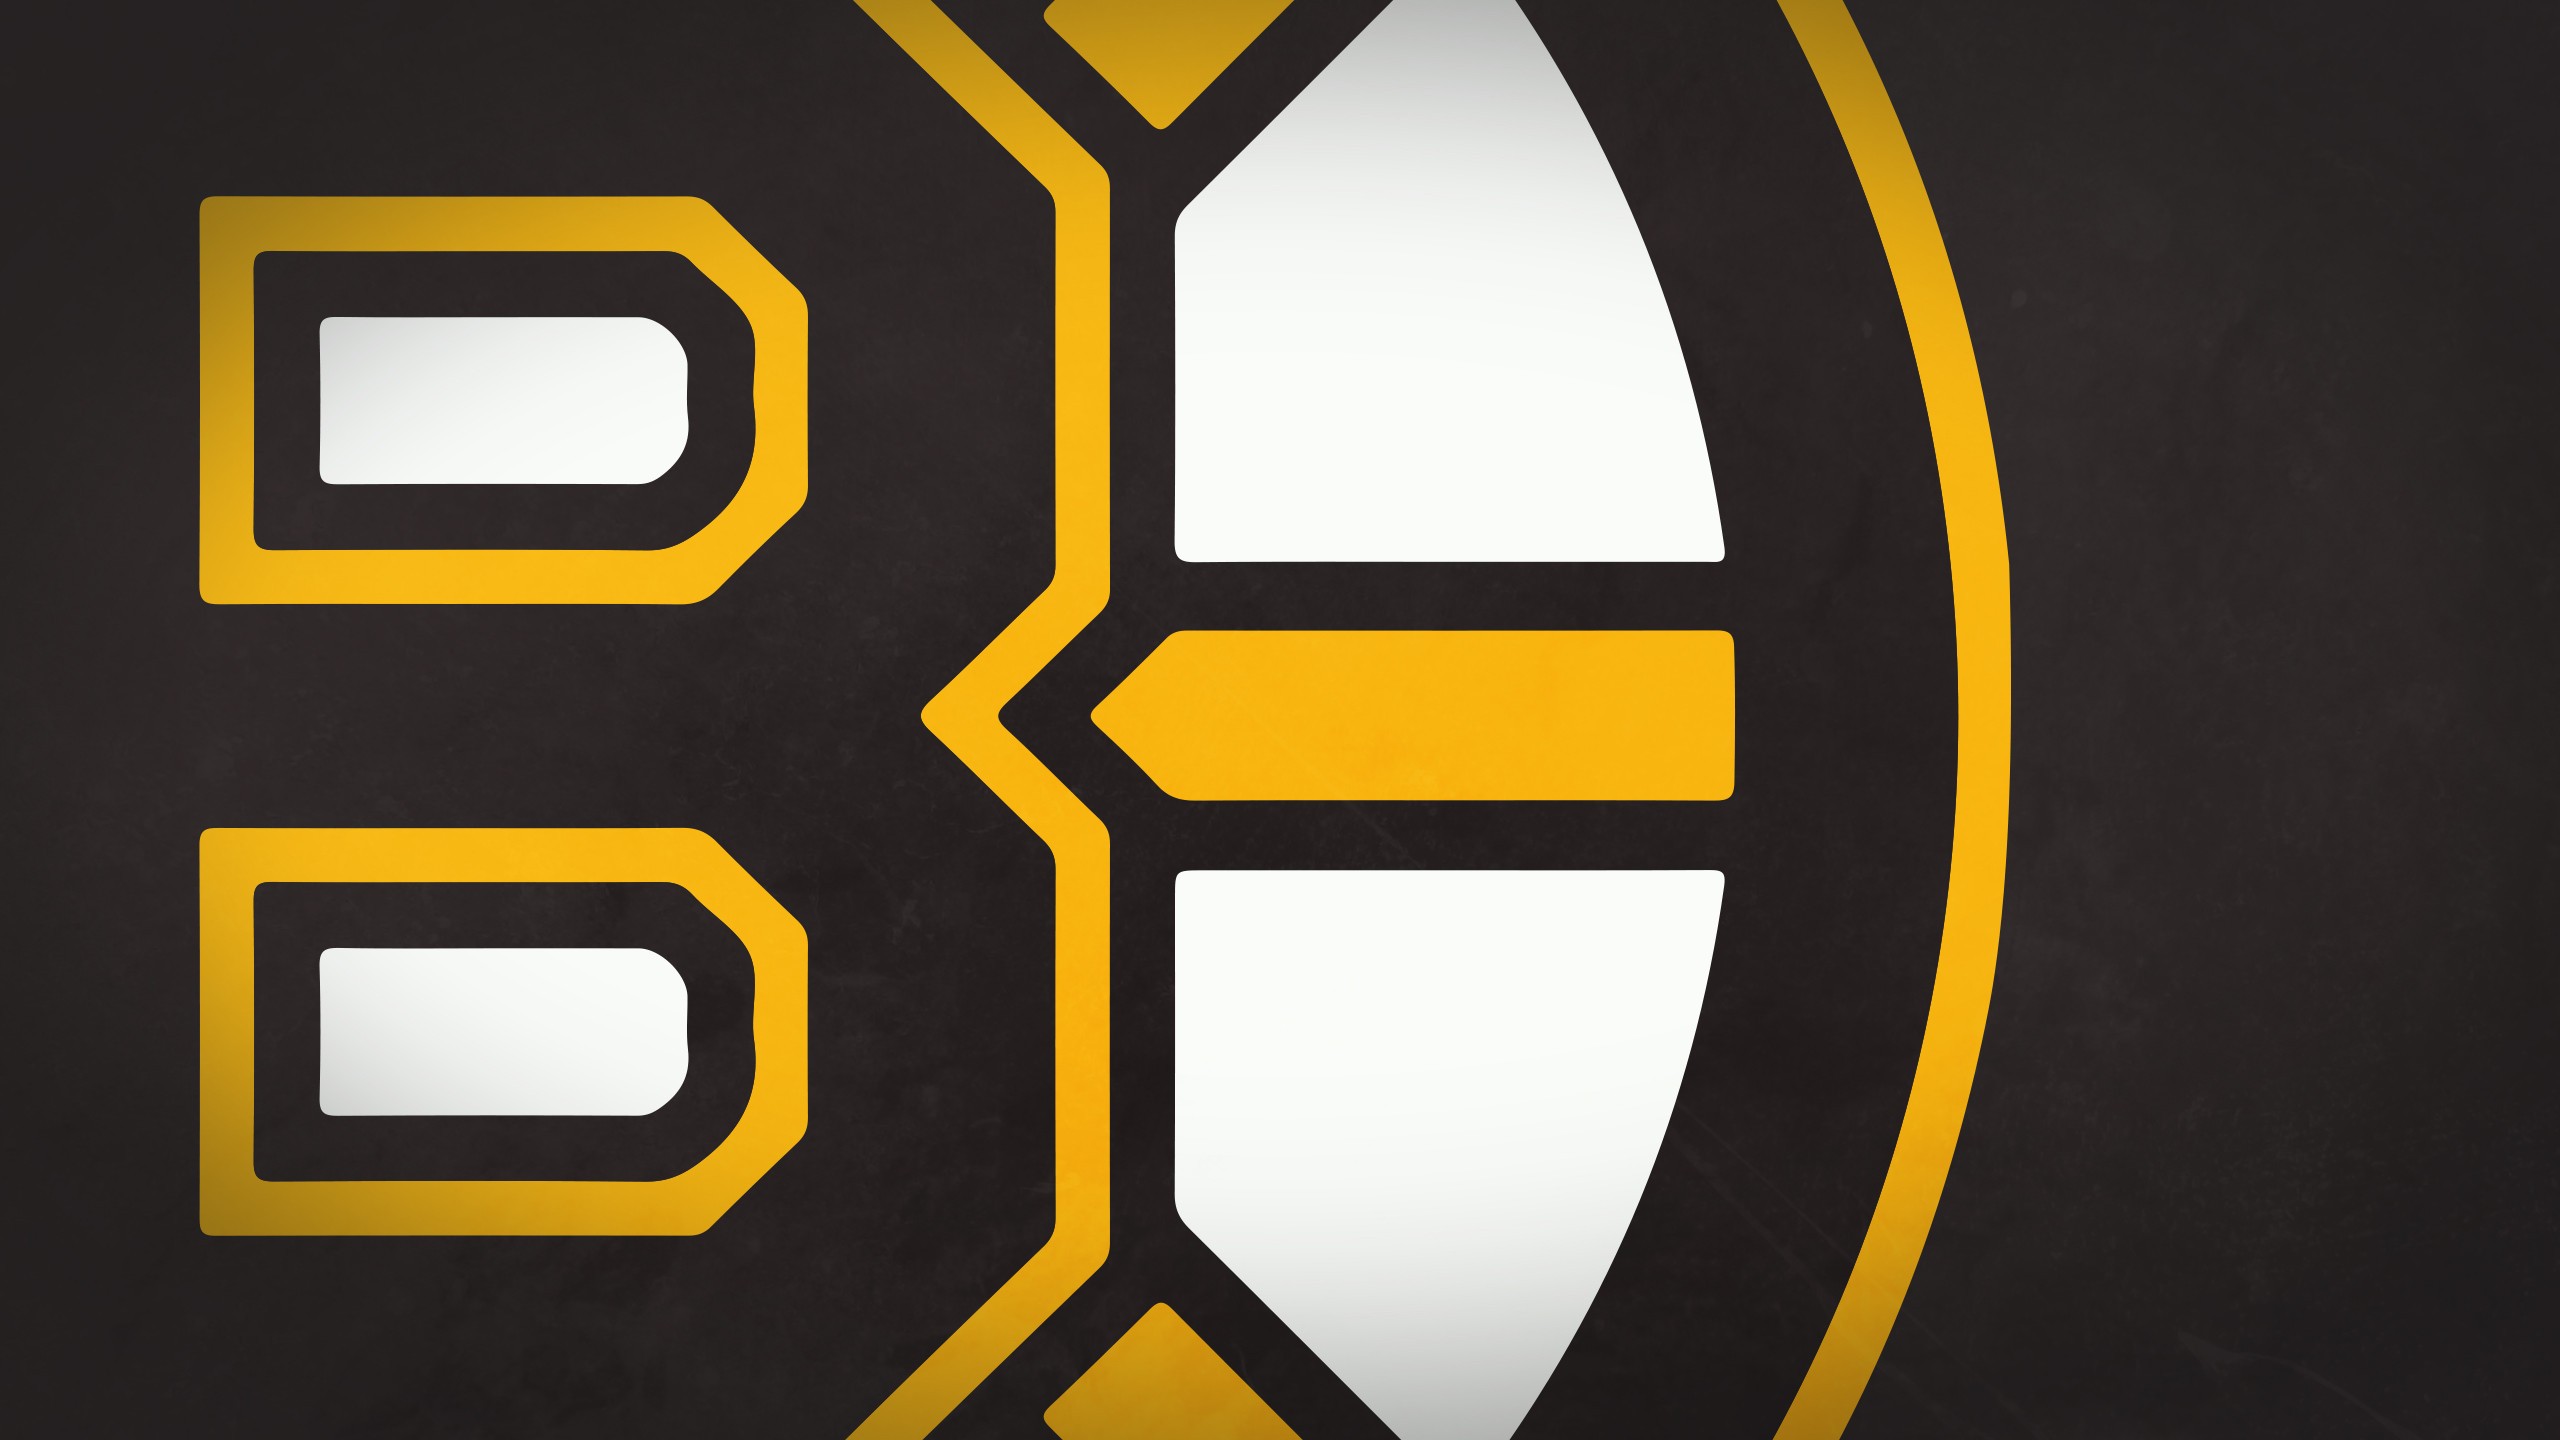 Boston Bruins Logo History